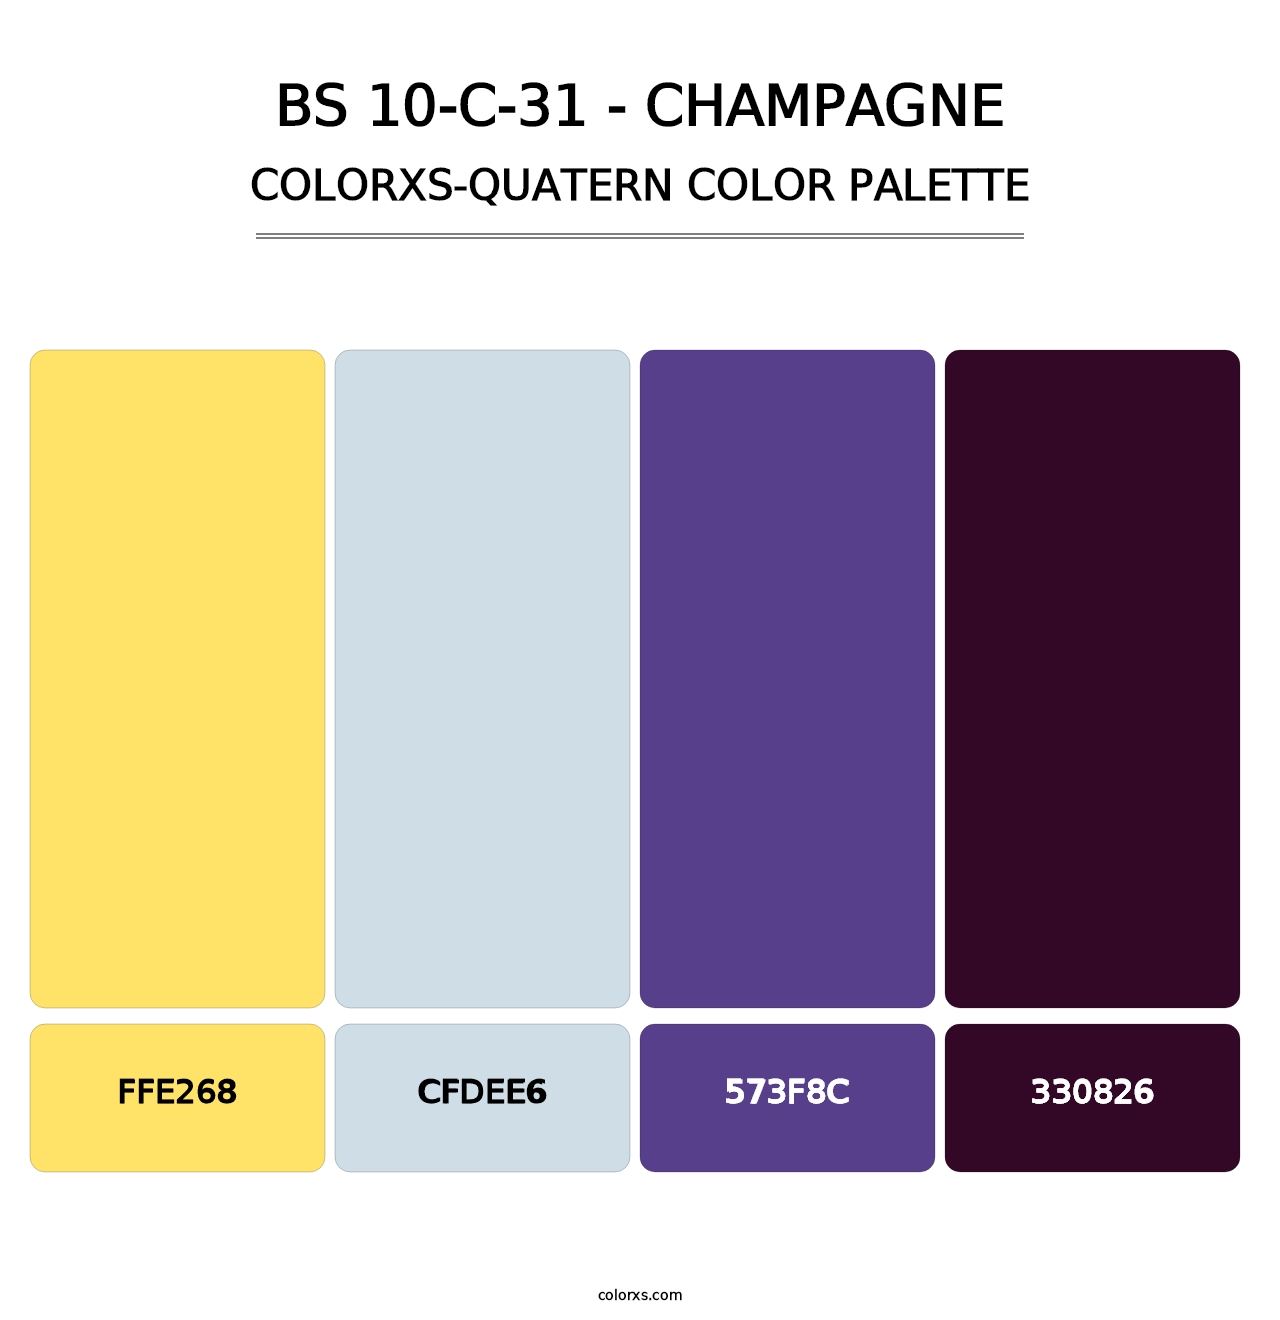 BS 10-C-31 - Champagne - Colorxs Quatern Palette